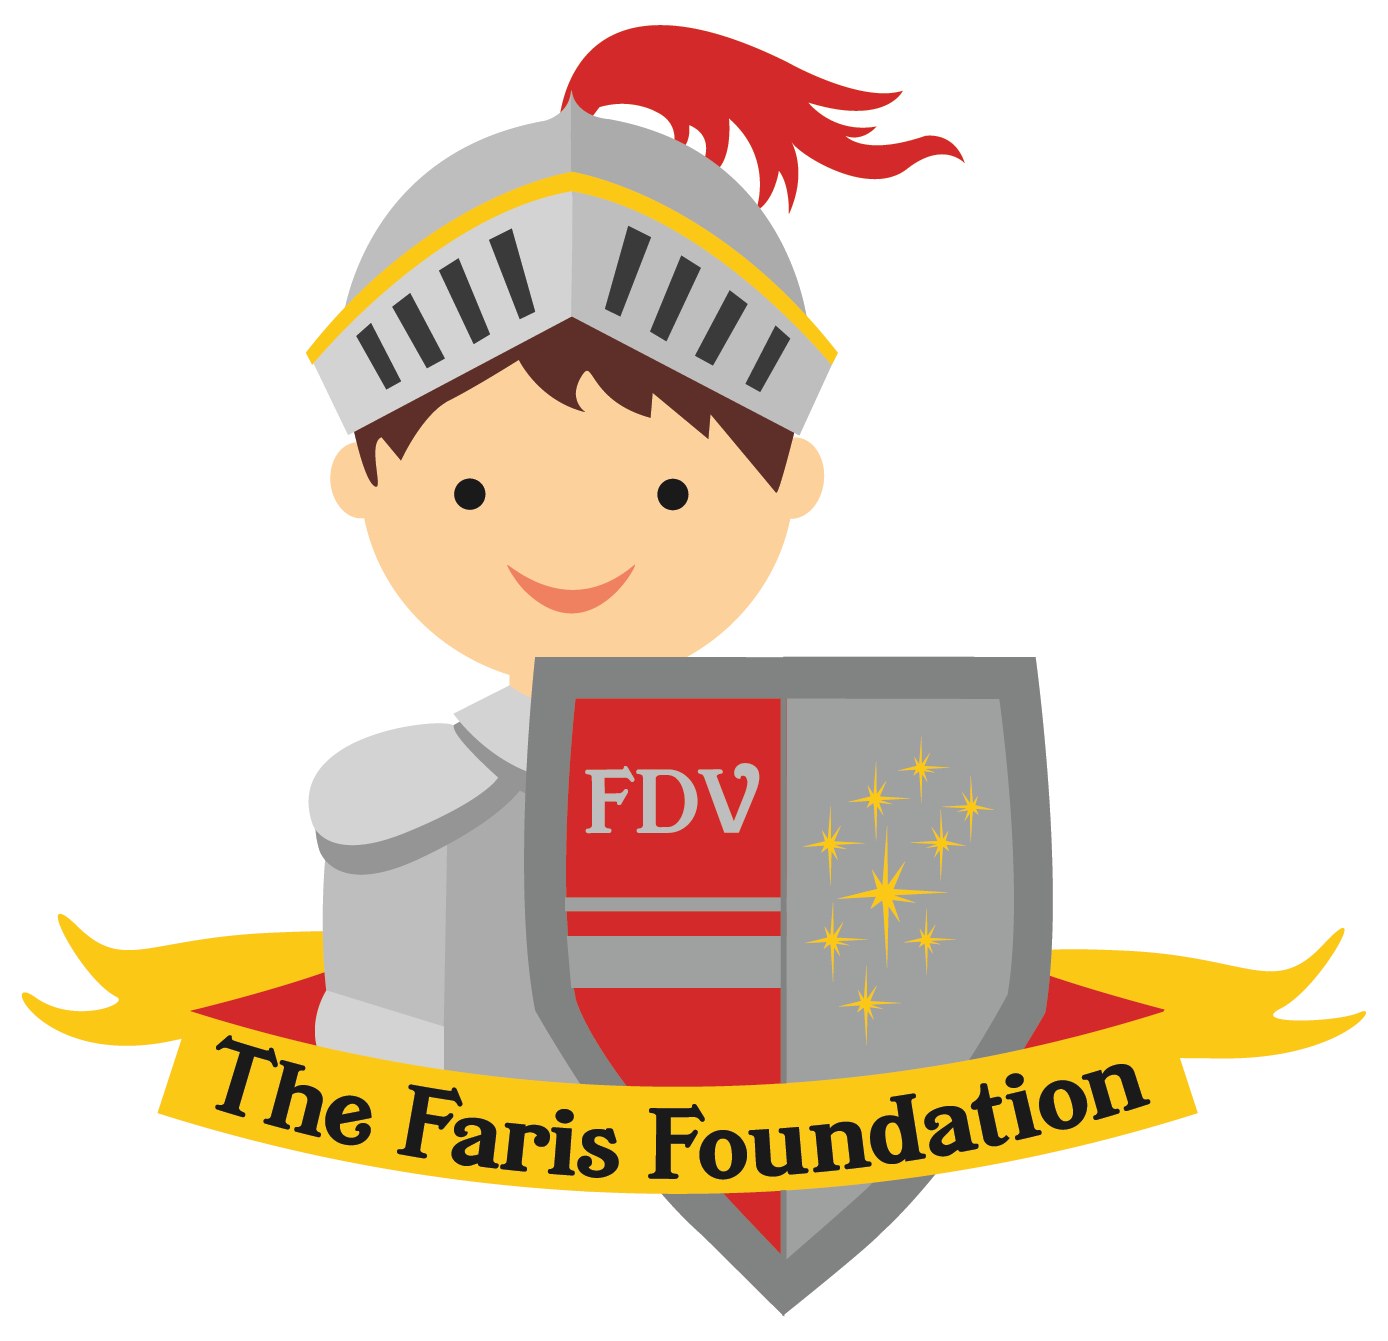 The Faris Foundation